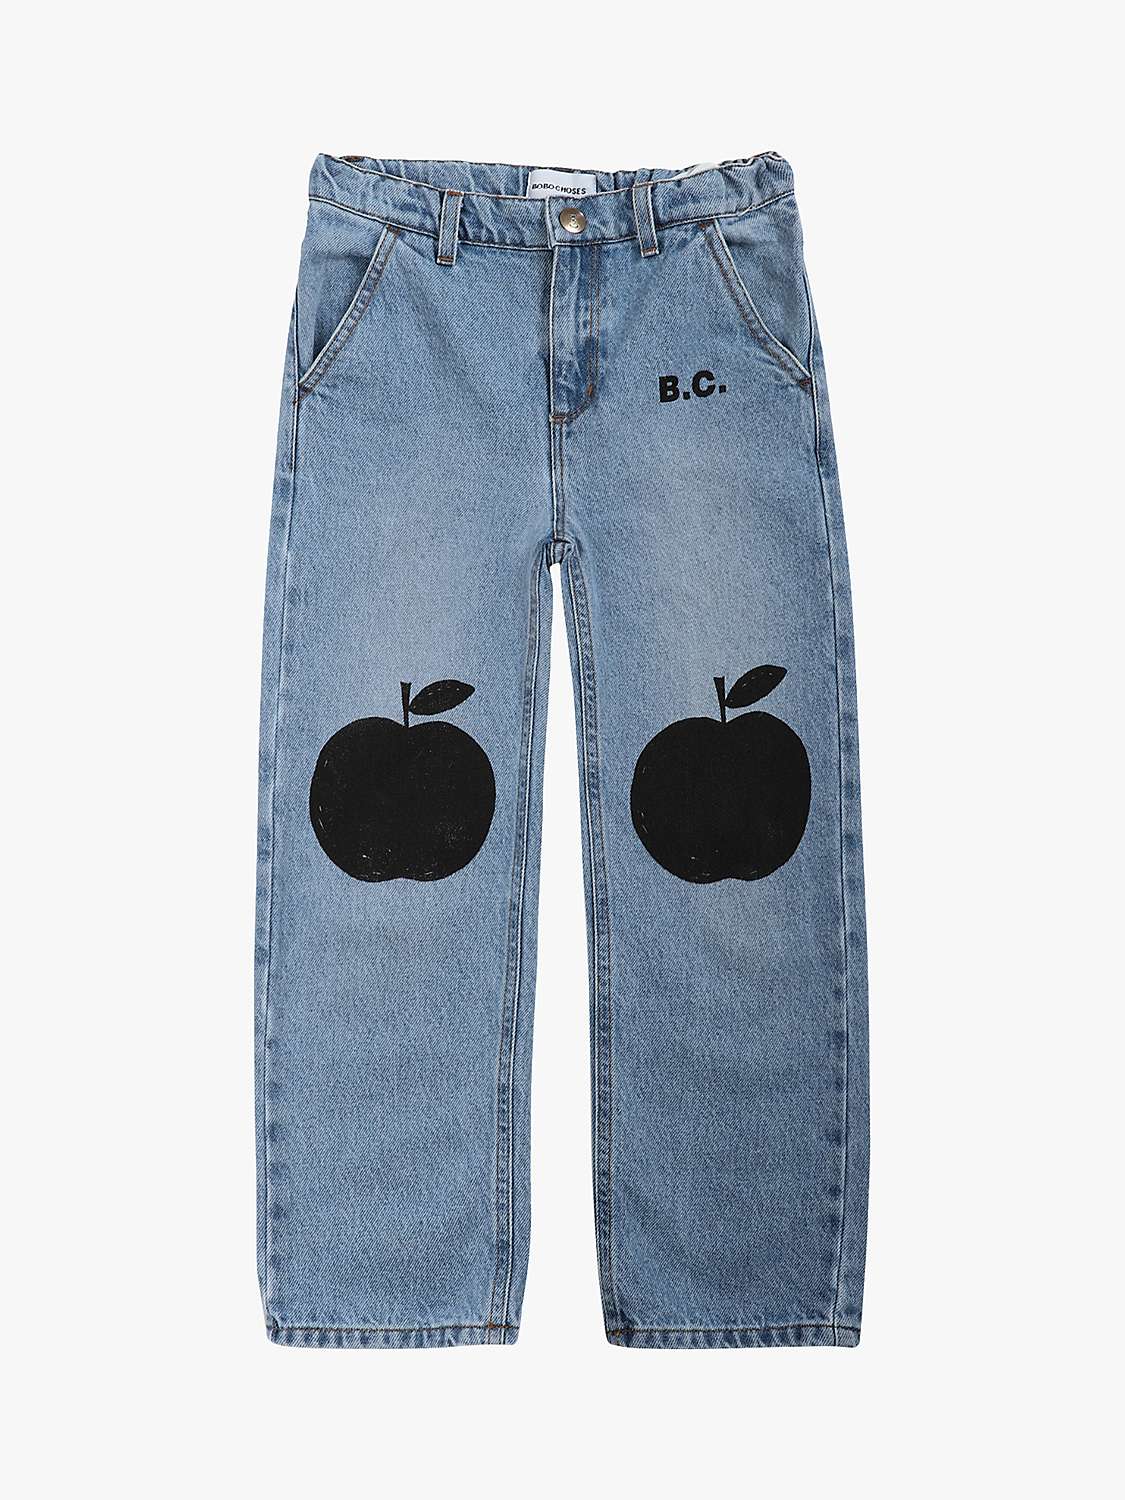 Buy Bobo Choses Kids' Apple Patch Denim Jeans, Mid Wash Online at johnlewis.com